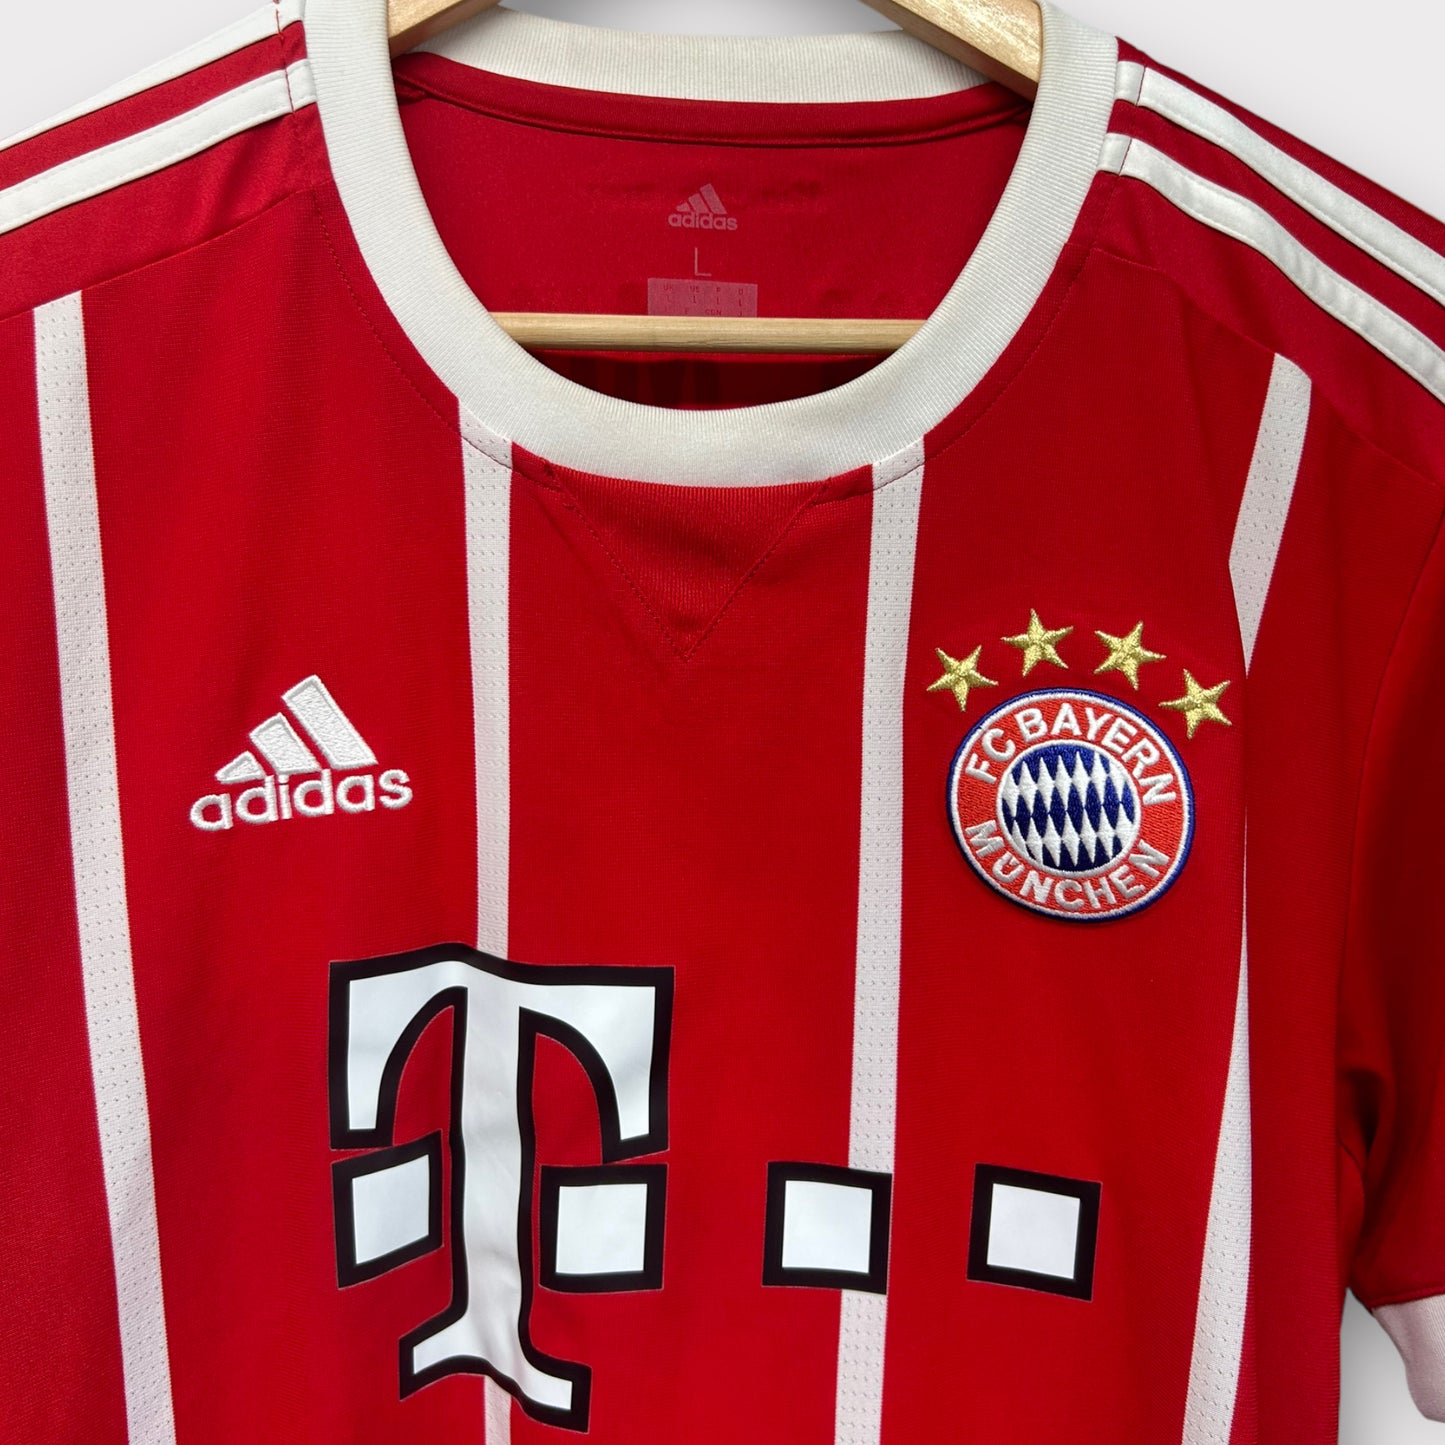 Bayern Munich 2017/18 Home Shirt - Hummels 5 (Large)